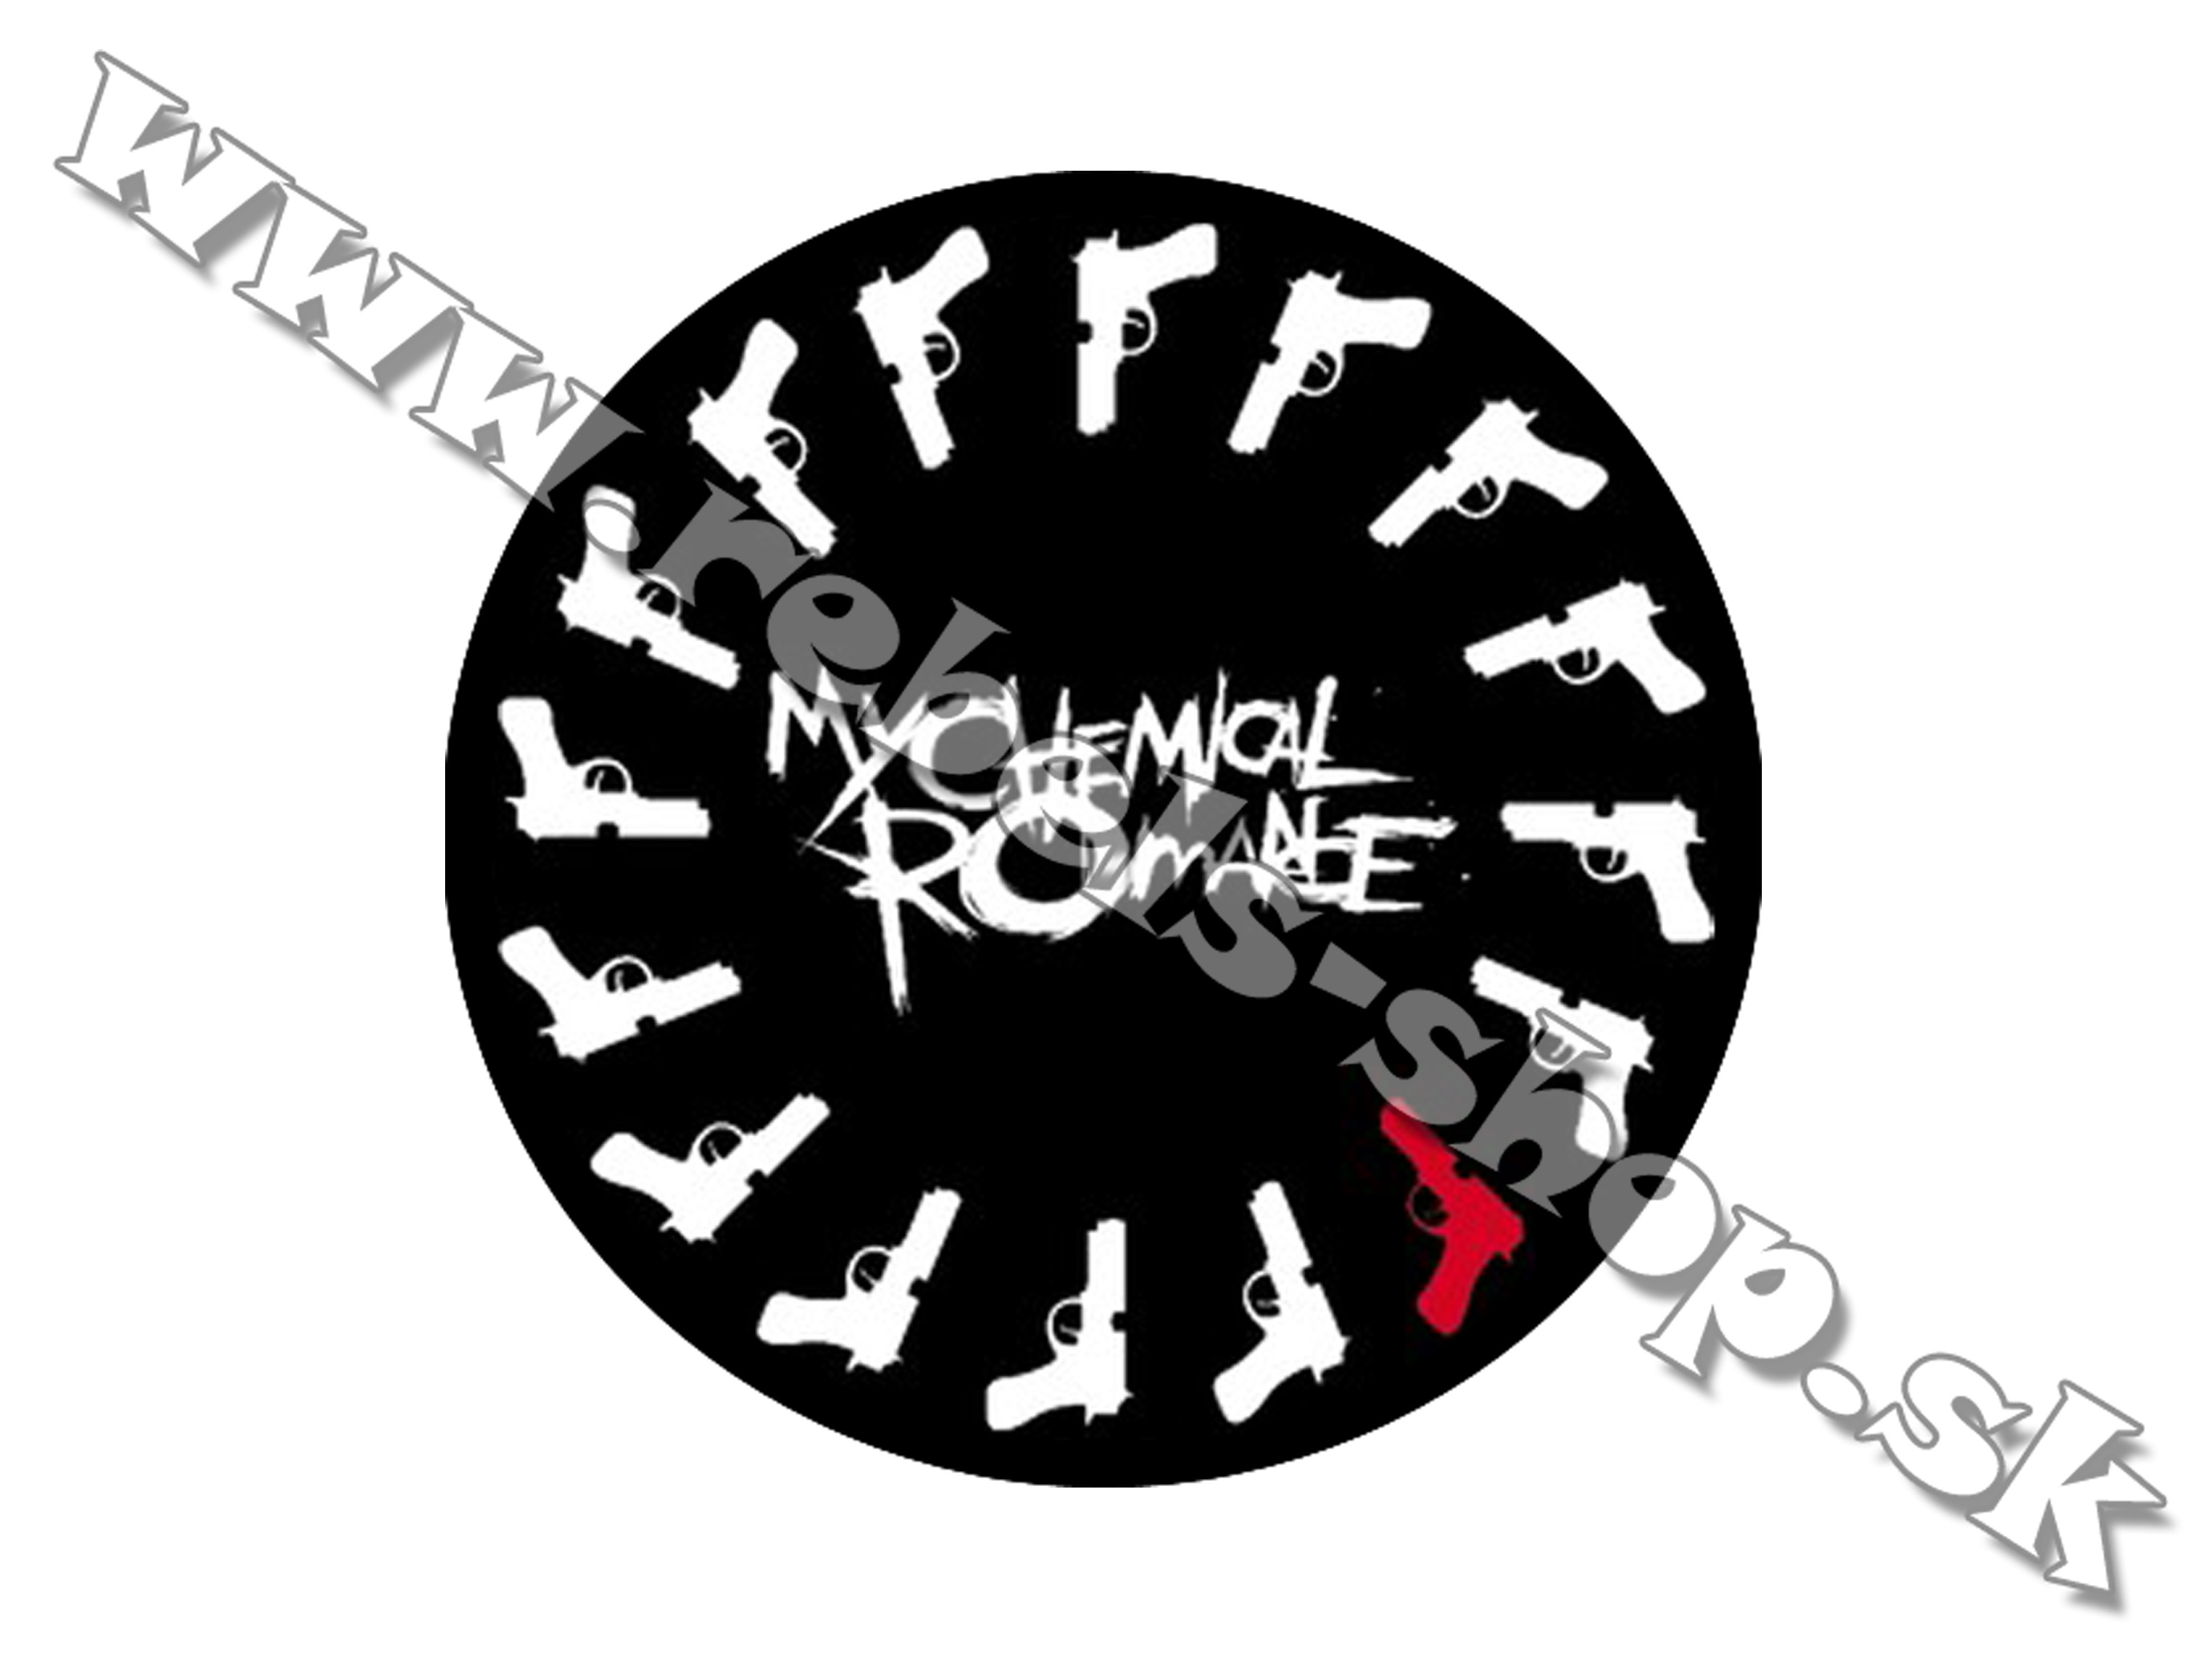 Odznak "My Chemical Romance"